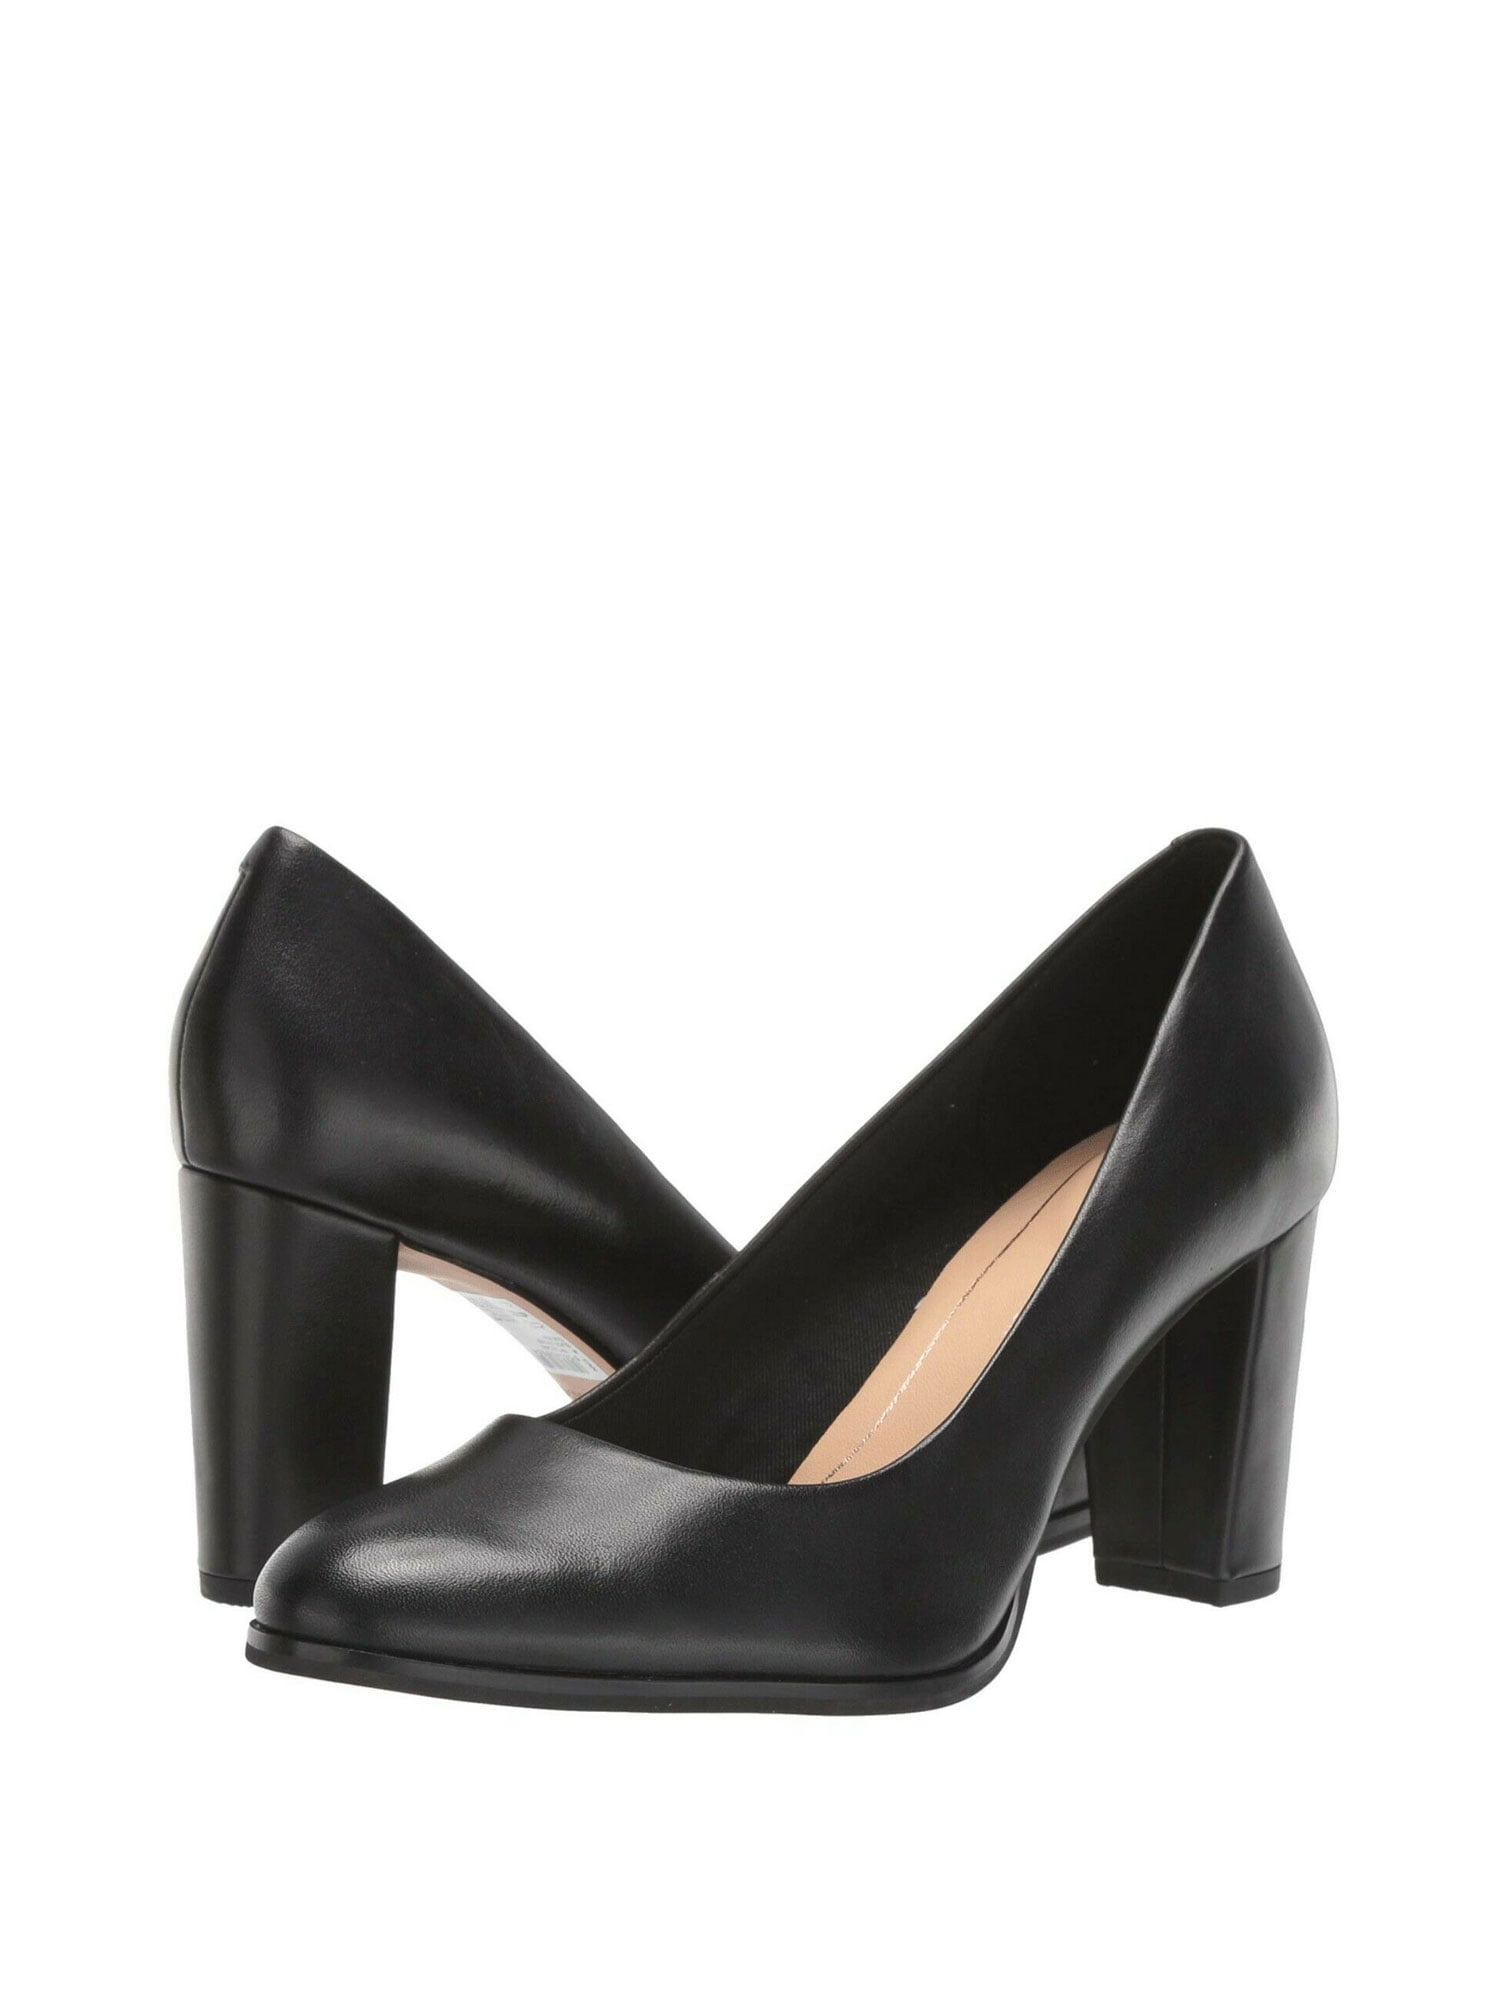 Women/'s Shoes Clarks KAYLIN CARA Leather Work Pump Block Heel 45688 Black Smooth